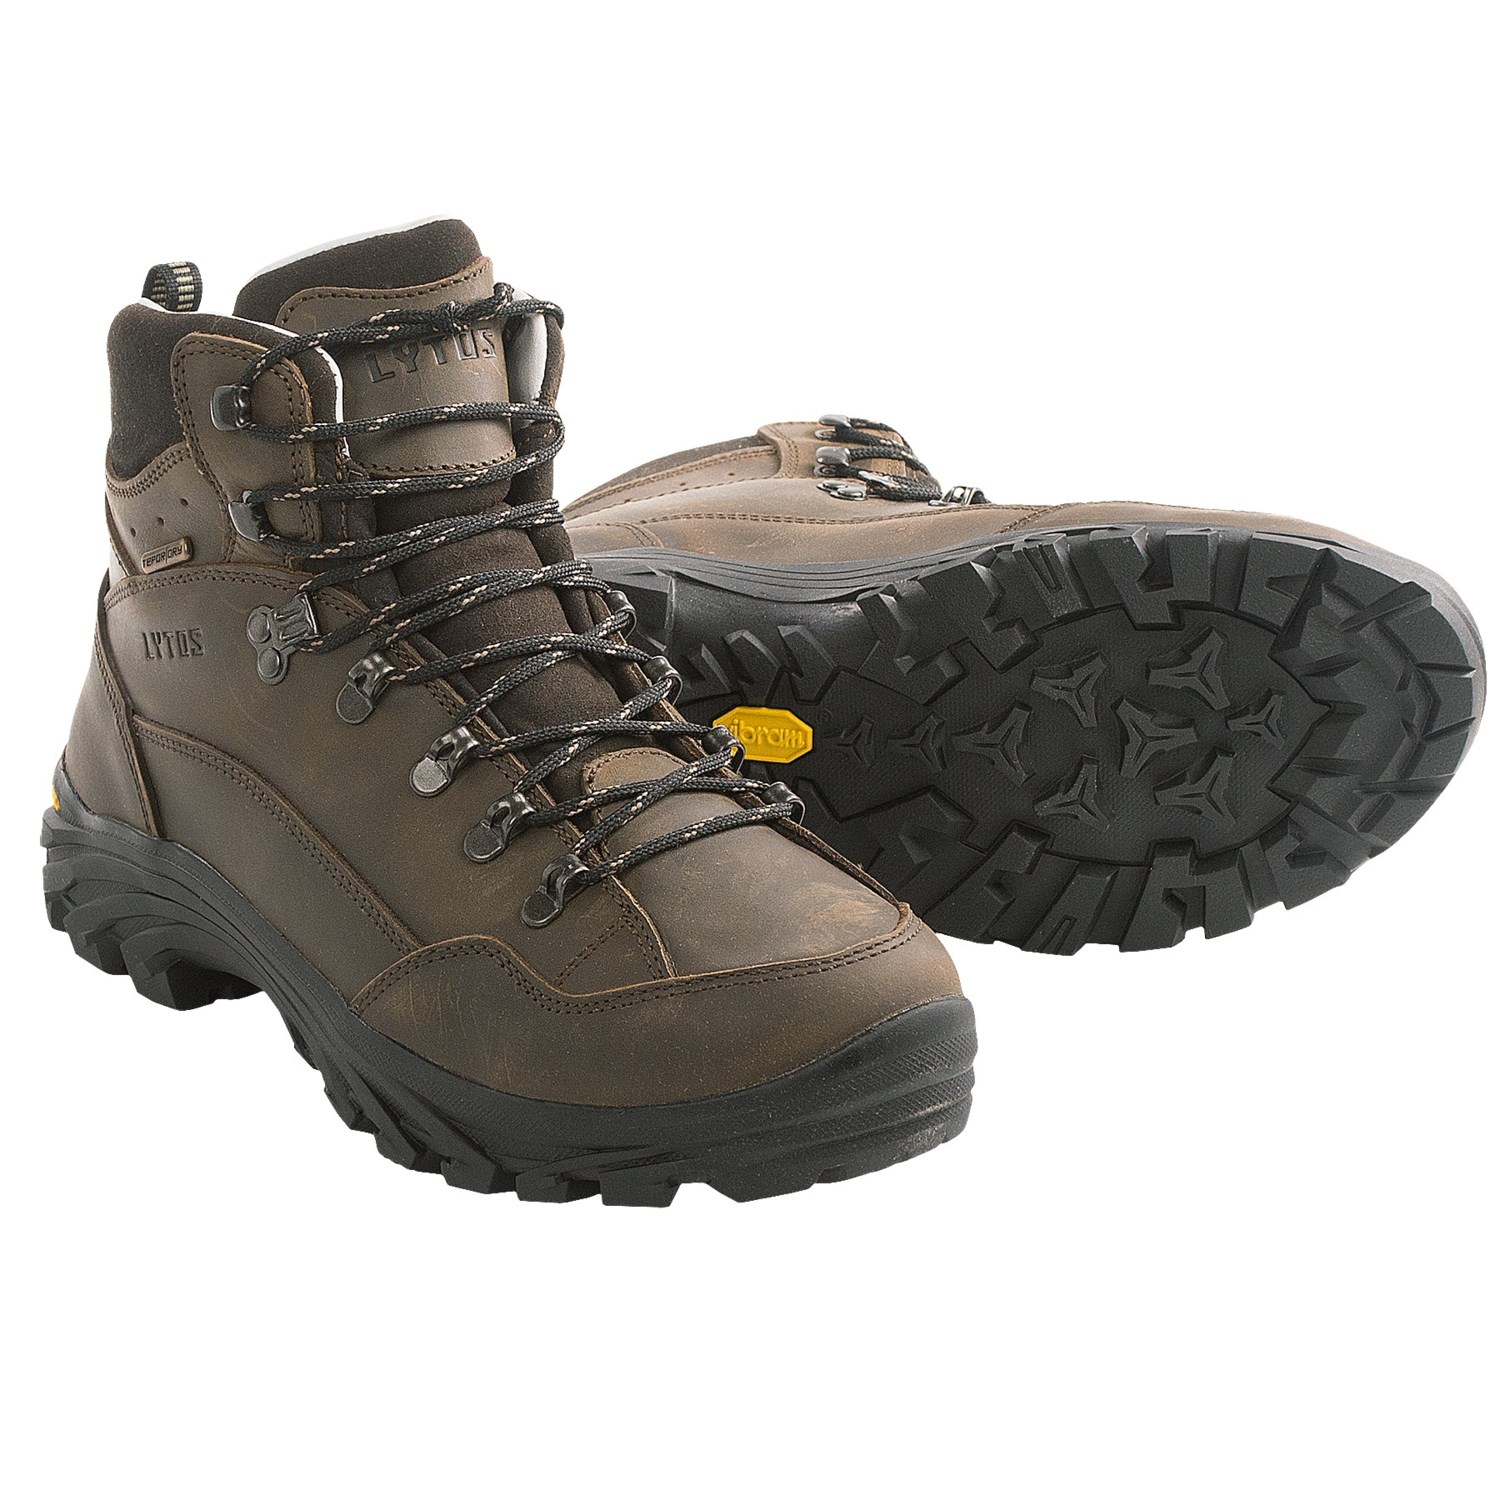 Lytos Trekker Midweight Hiking Boots - Waterproof (For Men) in Brown